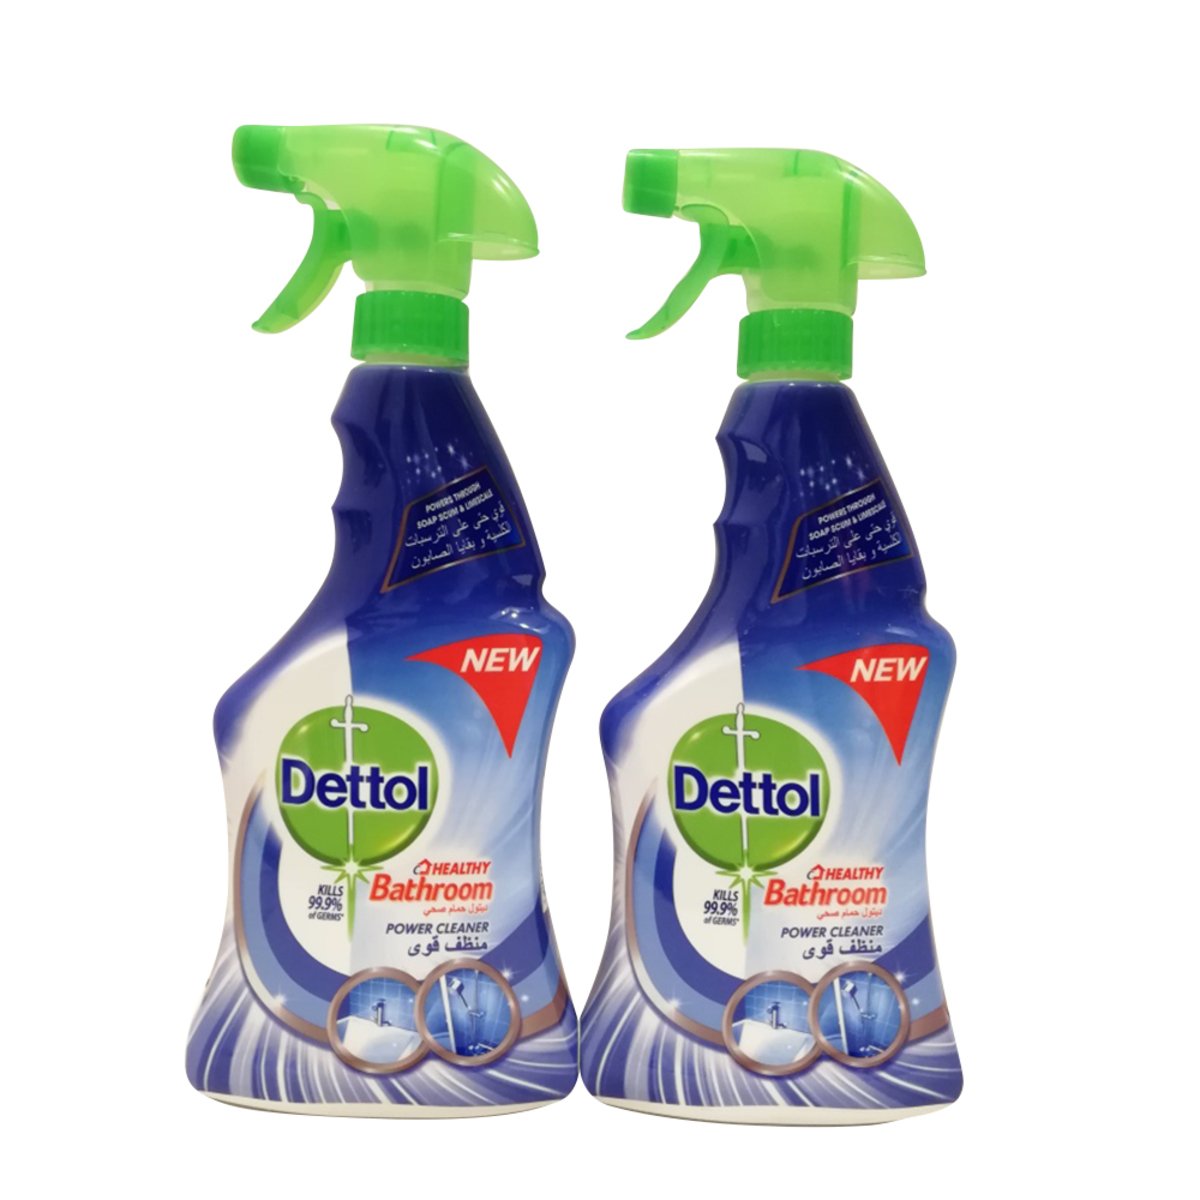 Dettol Anti Bacterial Bathroom Cleaner 2 x 500ml